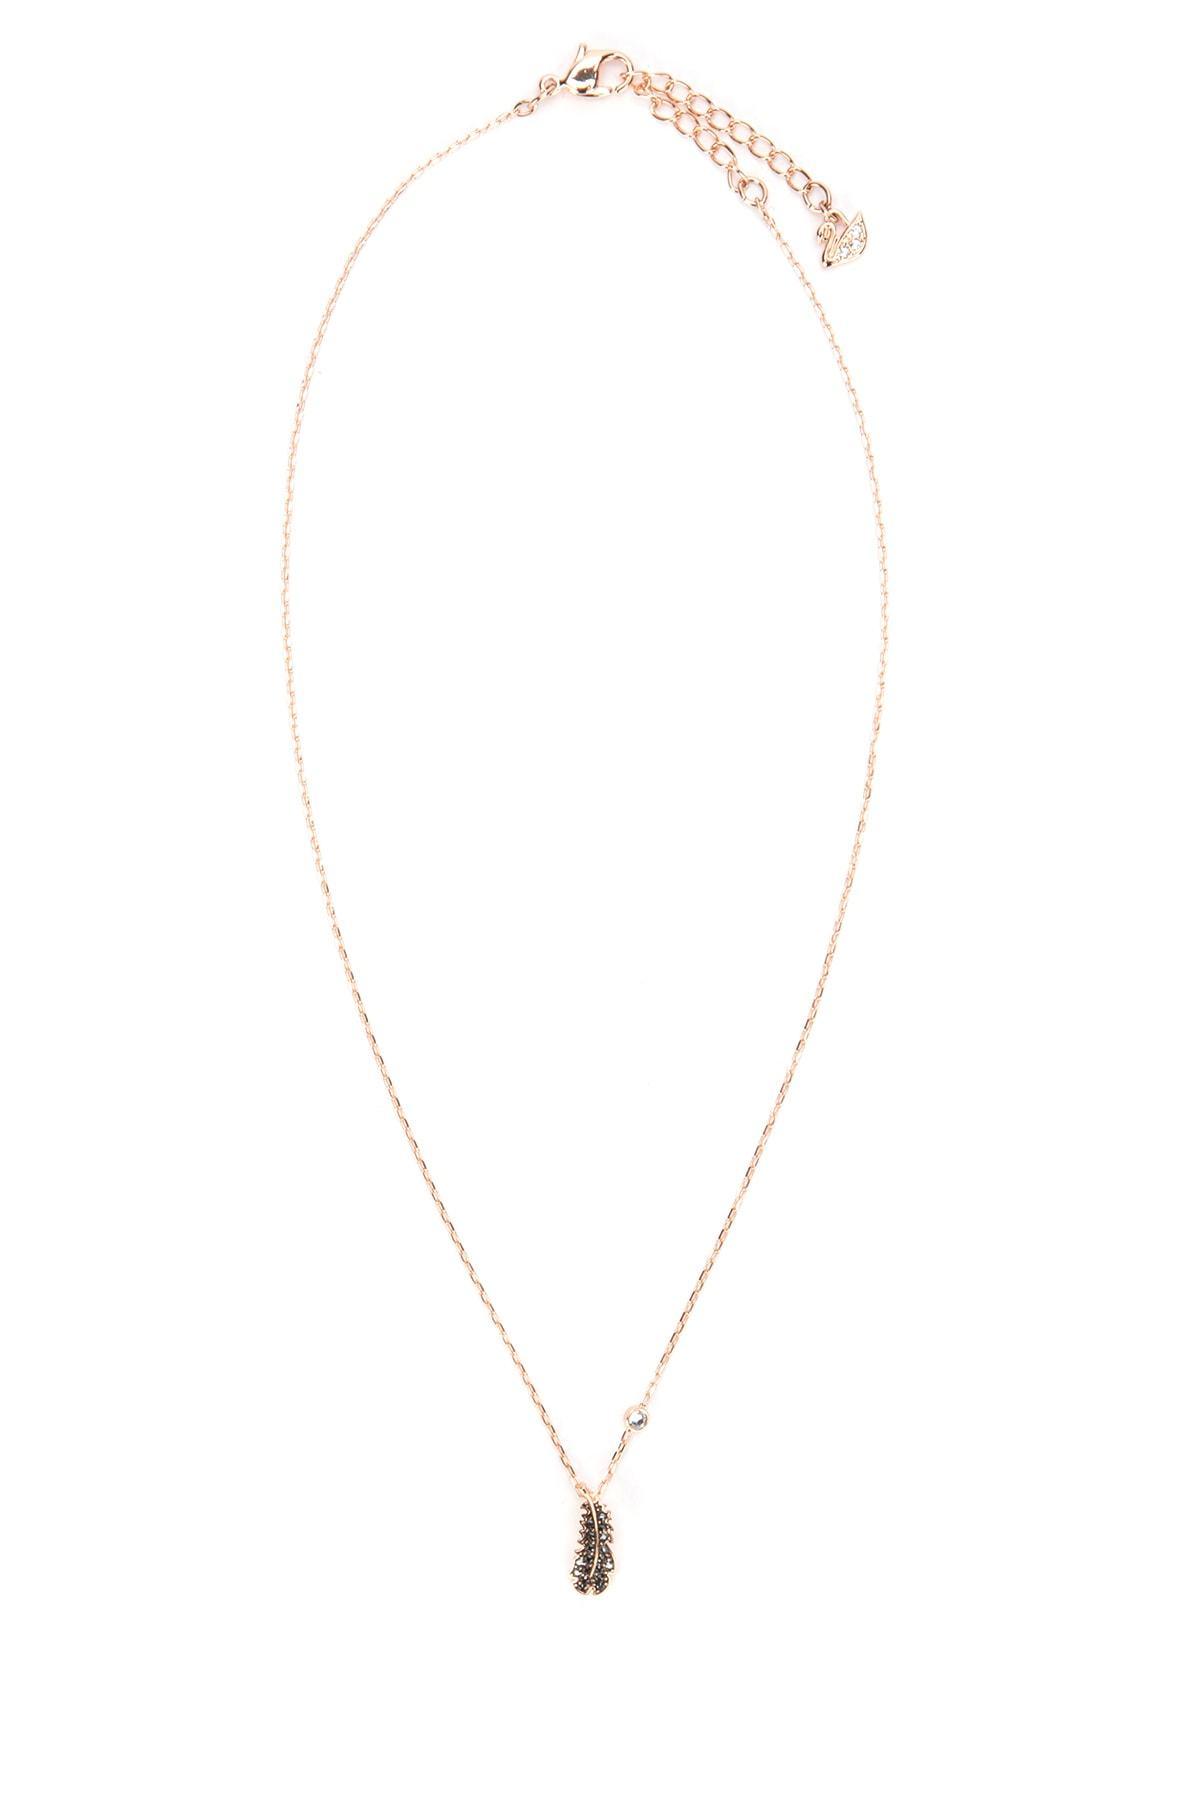 Buy Swarovski Nice Y pendant, Feather, White, Rose gold-tone plated